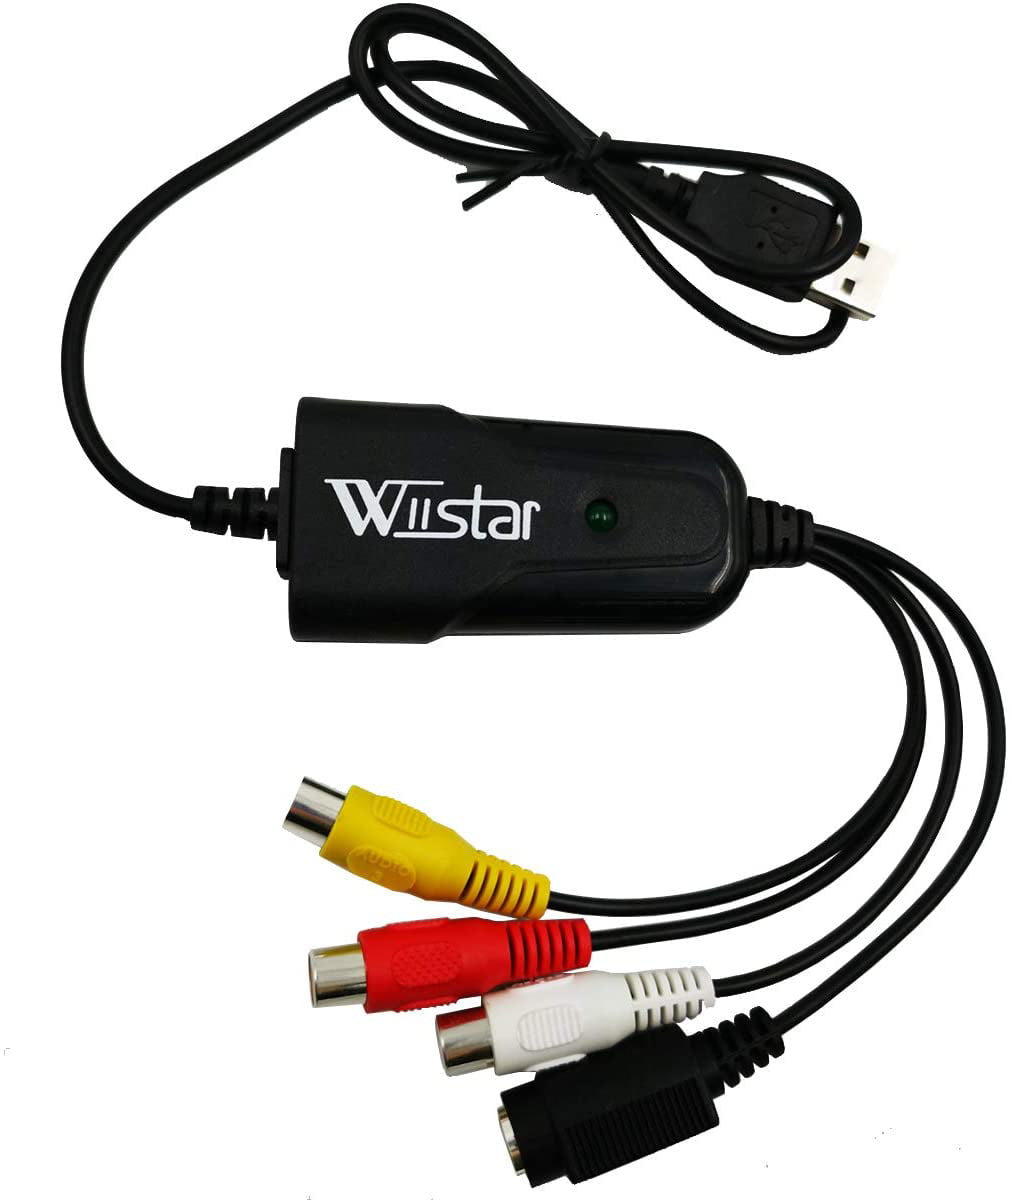 USB 2.0 Audio/Video Grabber kompatibel mit Windows 8 und Windows 10 Video/VHS-Adapter Tech Stor3 